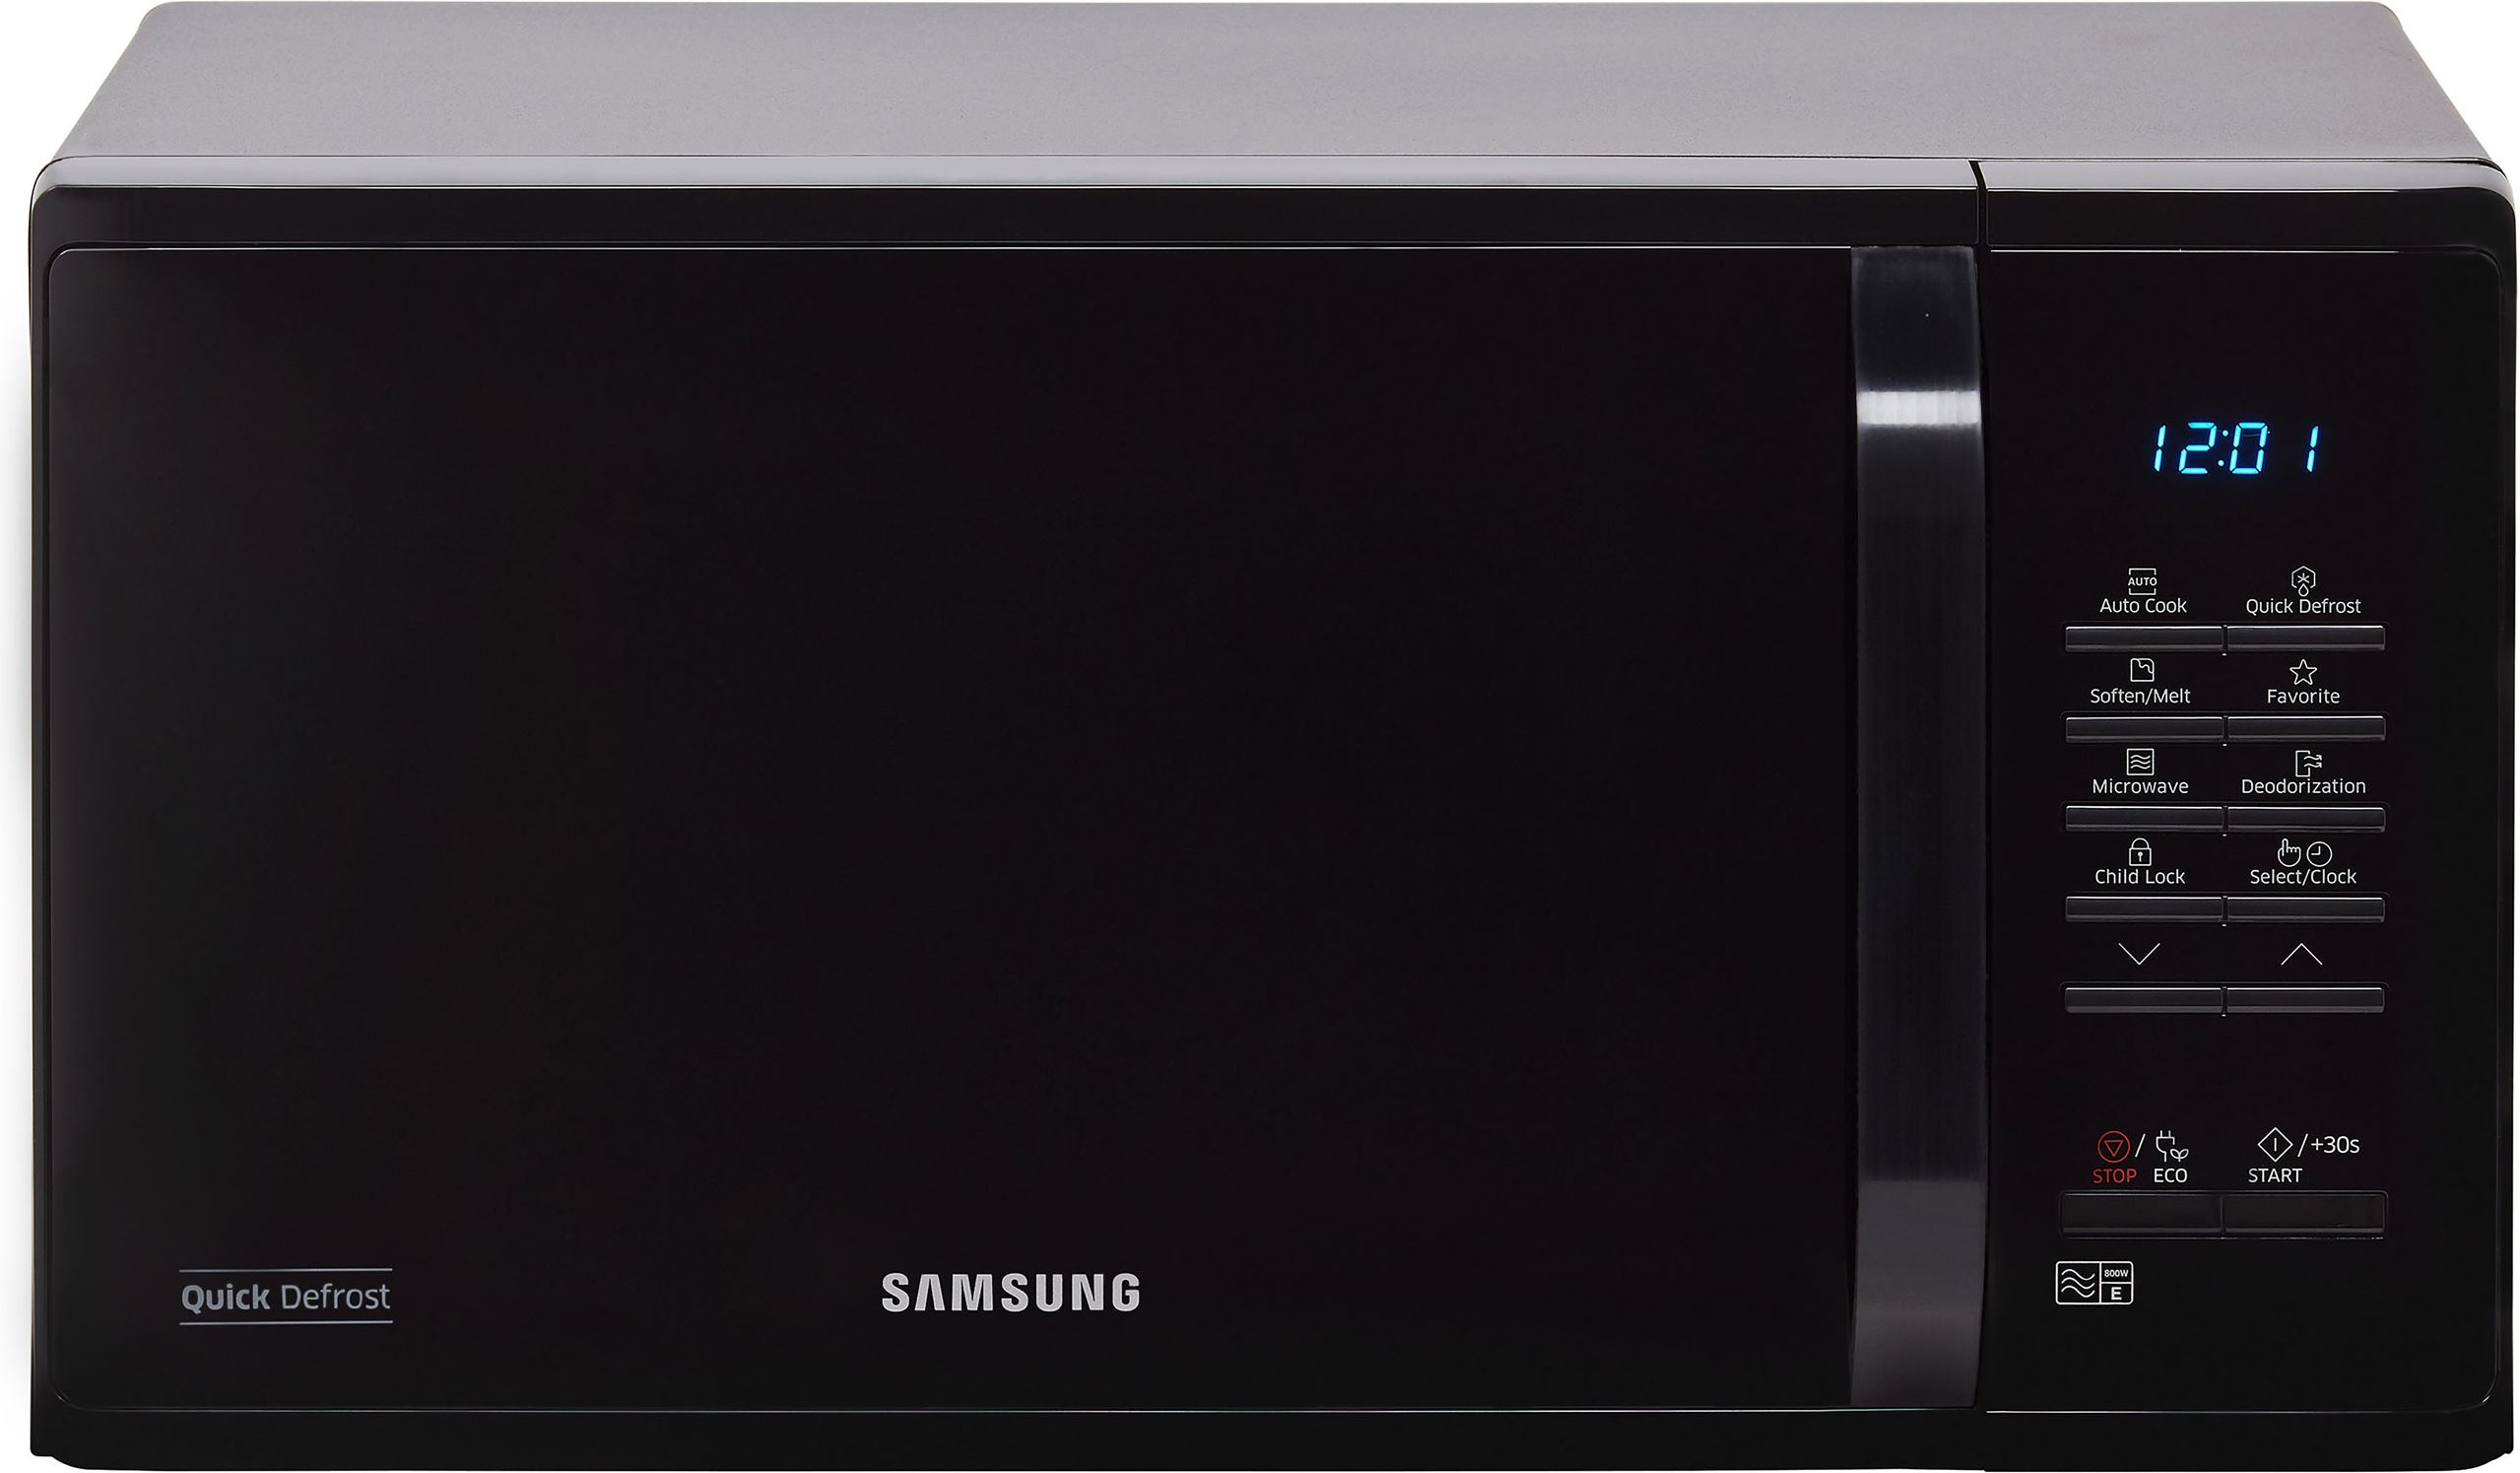 Samsung MS23K3513AK 28cm tall, 49cm wide, Freestanding Compact Microwave - Black, Black